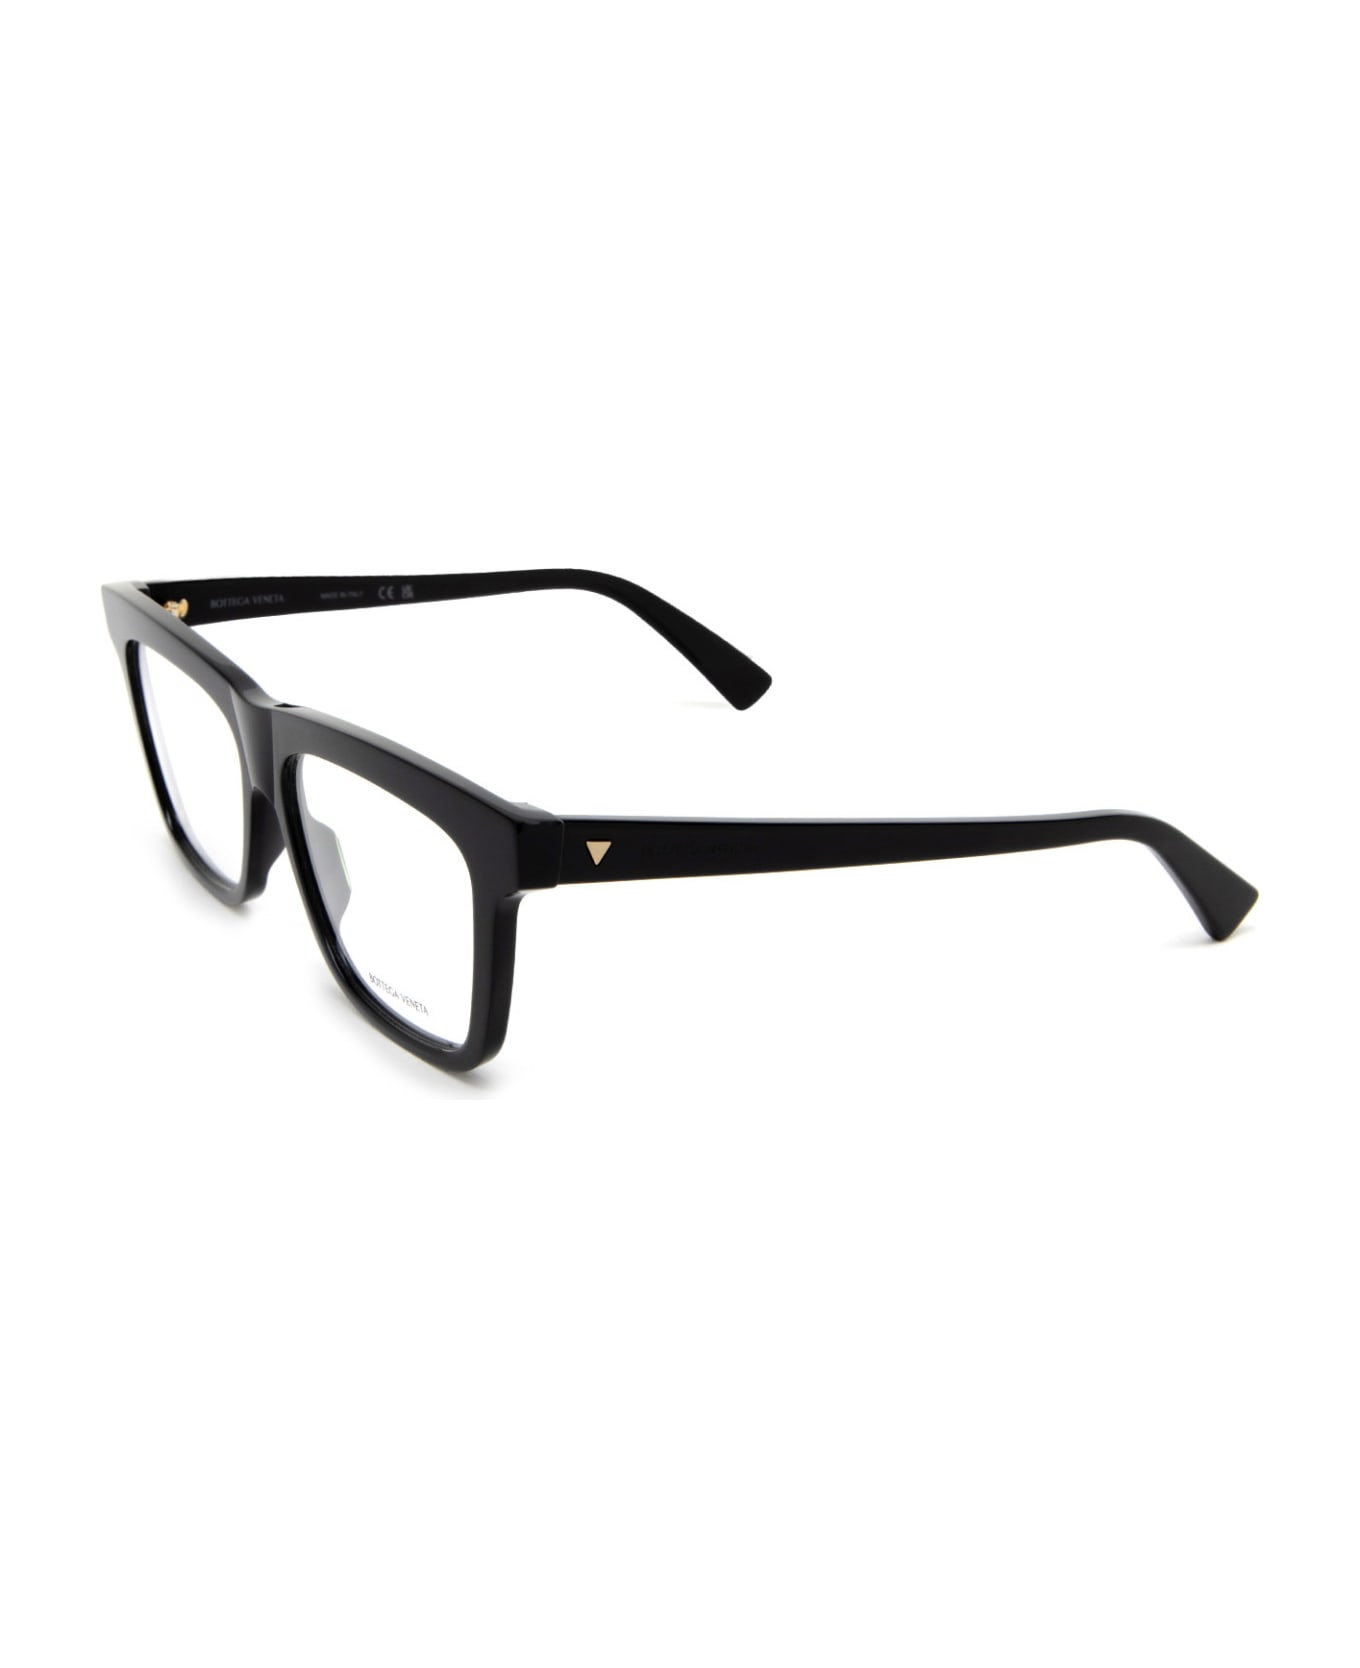 Bottega Veneta Eyewear Bv1227o Black Glasses - Black